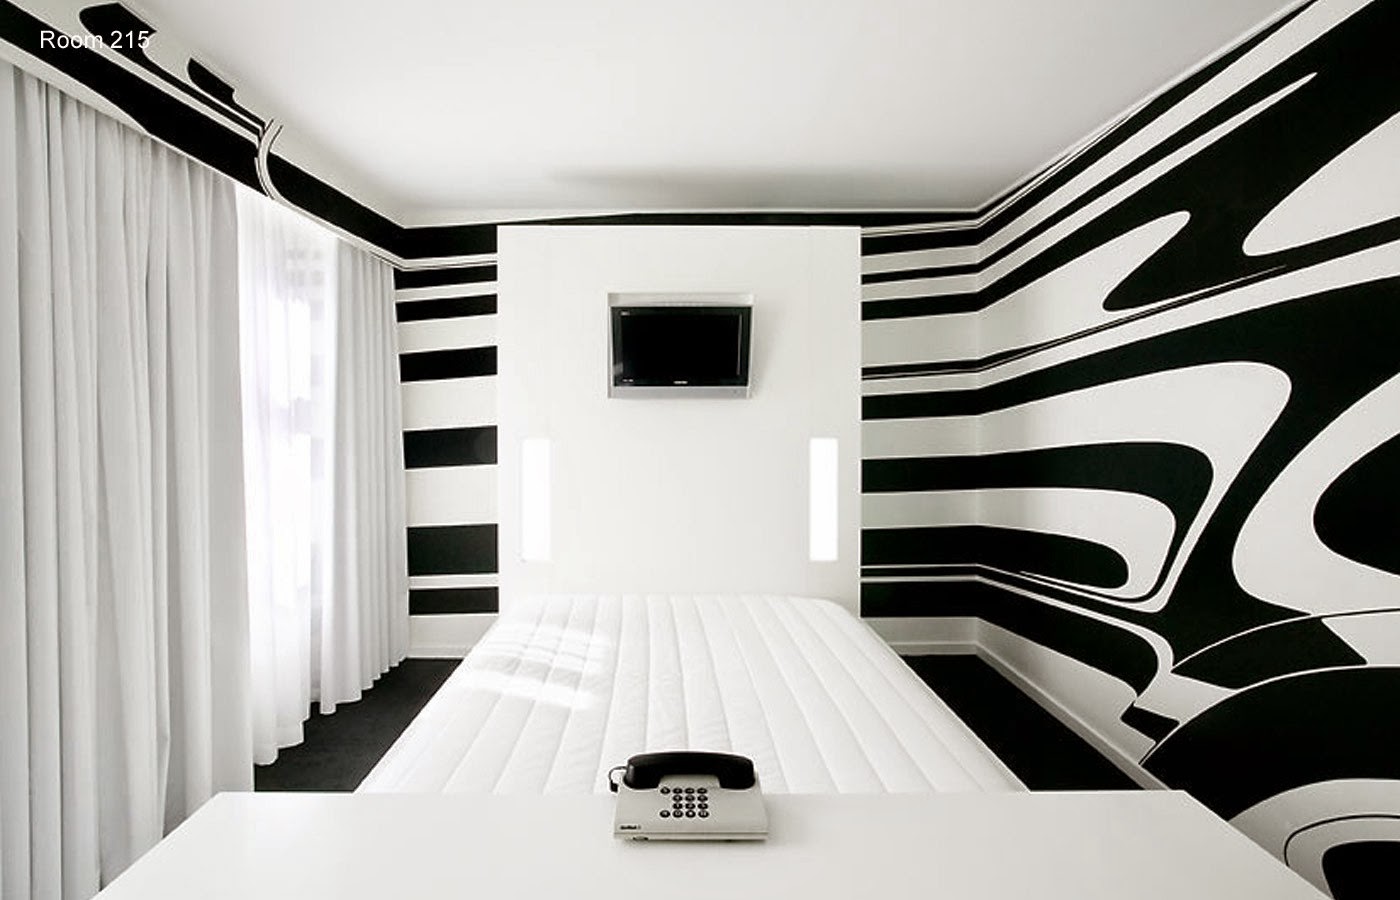 01-Hotel-Fox-Project-Fox-Room Designs-www-designstack-co